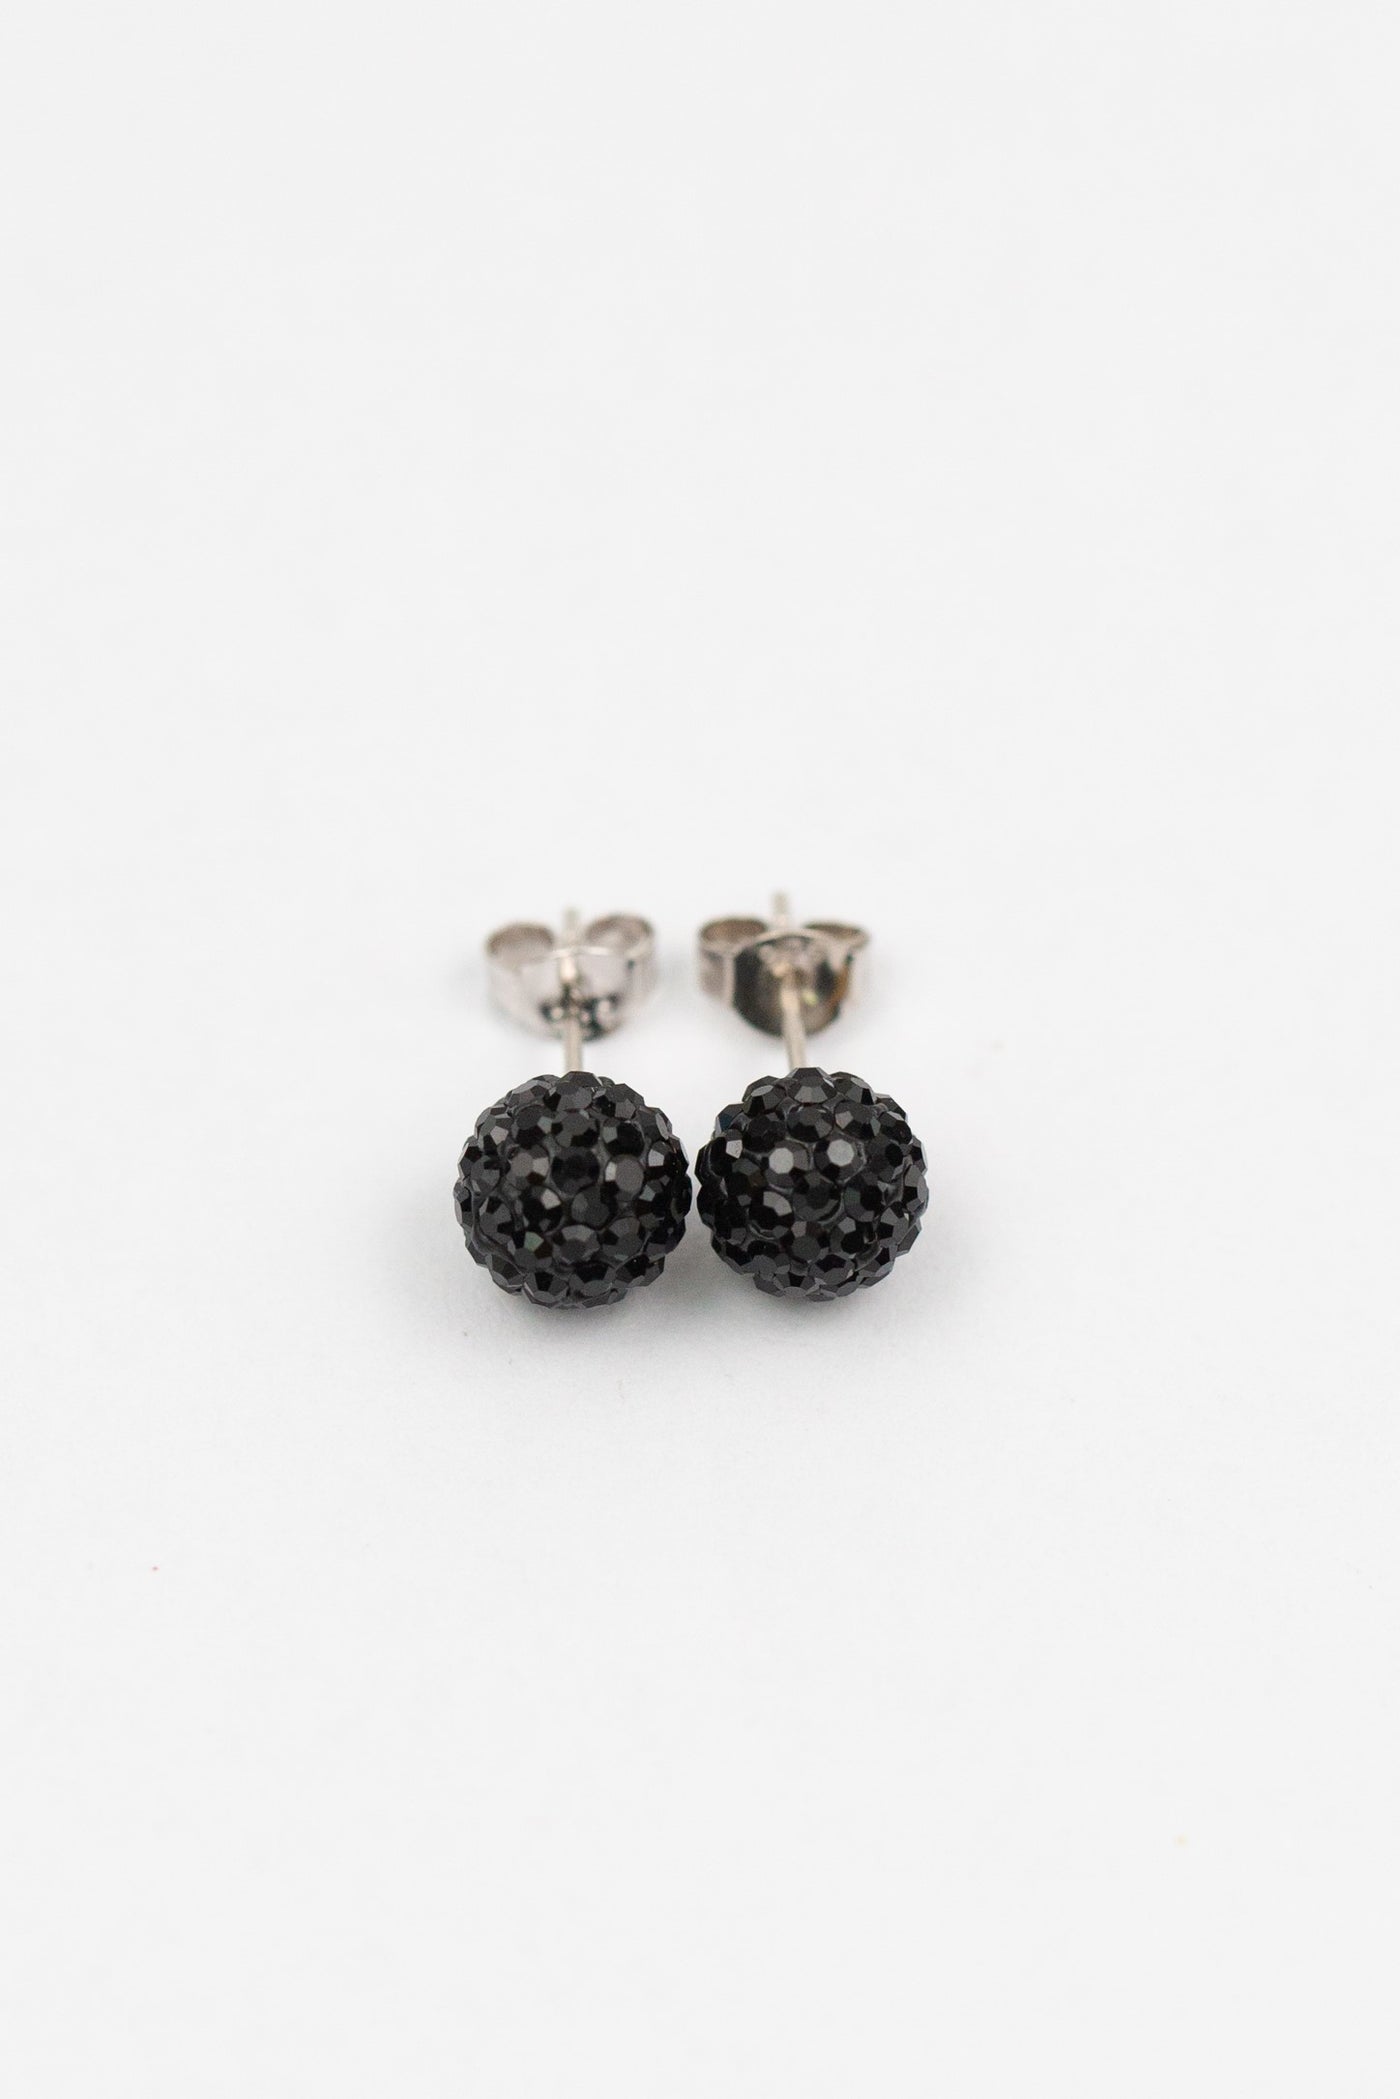 8mm Disco Ball Black Crystal Stud Earrings| Annie and Sisters | sister stud earrings, for kids, children's jewelry, kid's jewelry, best friend